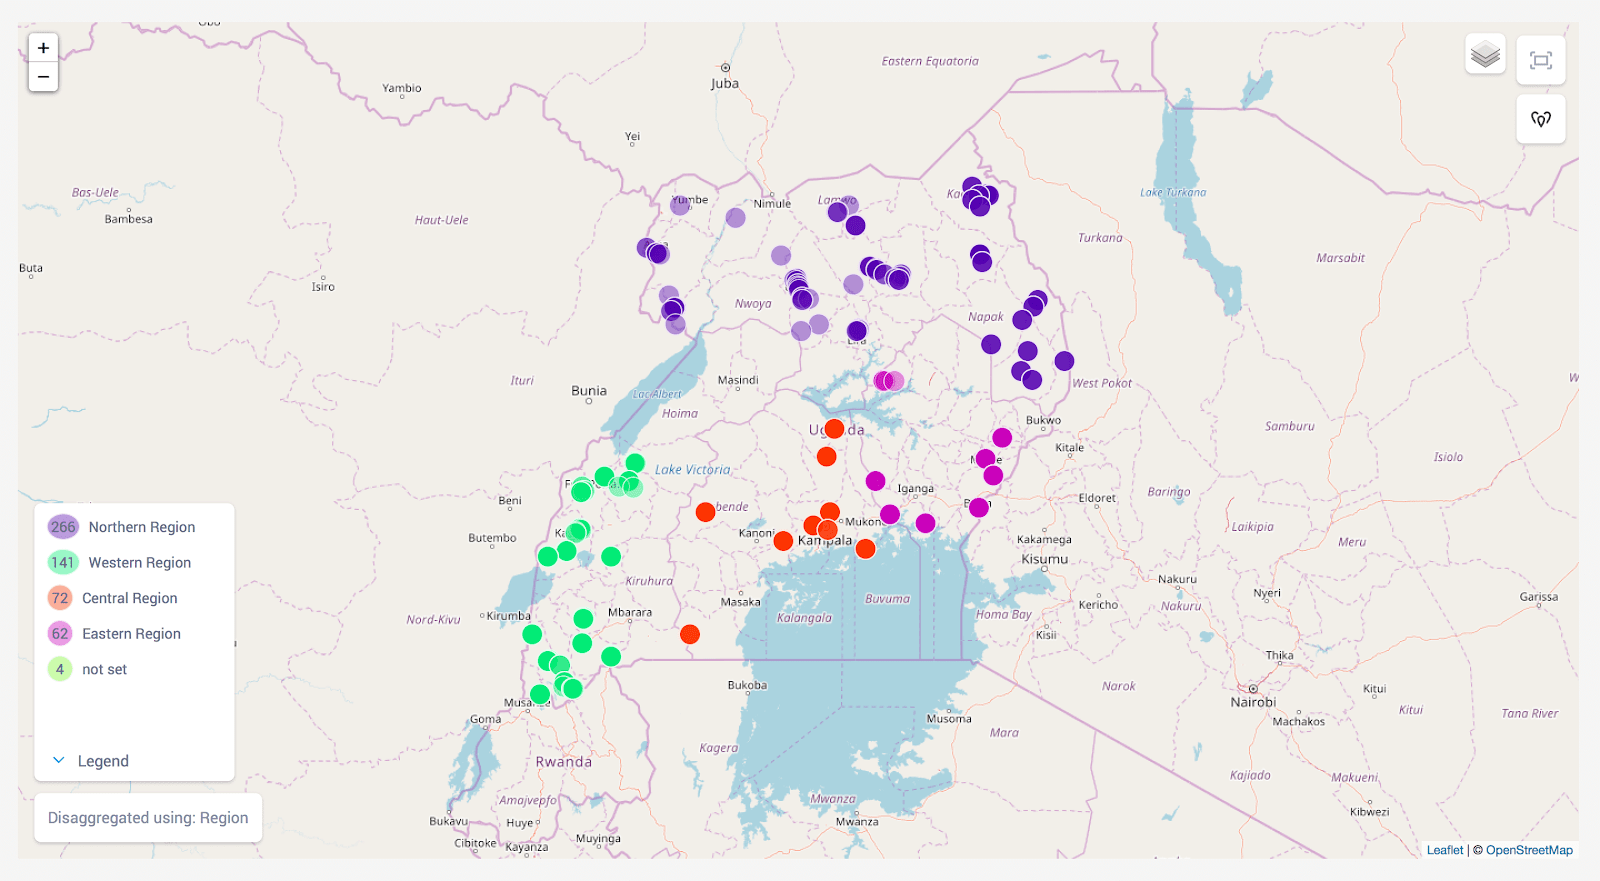 Kobo Dashboard showing data collected in Uganda